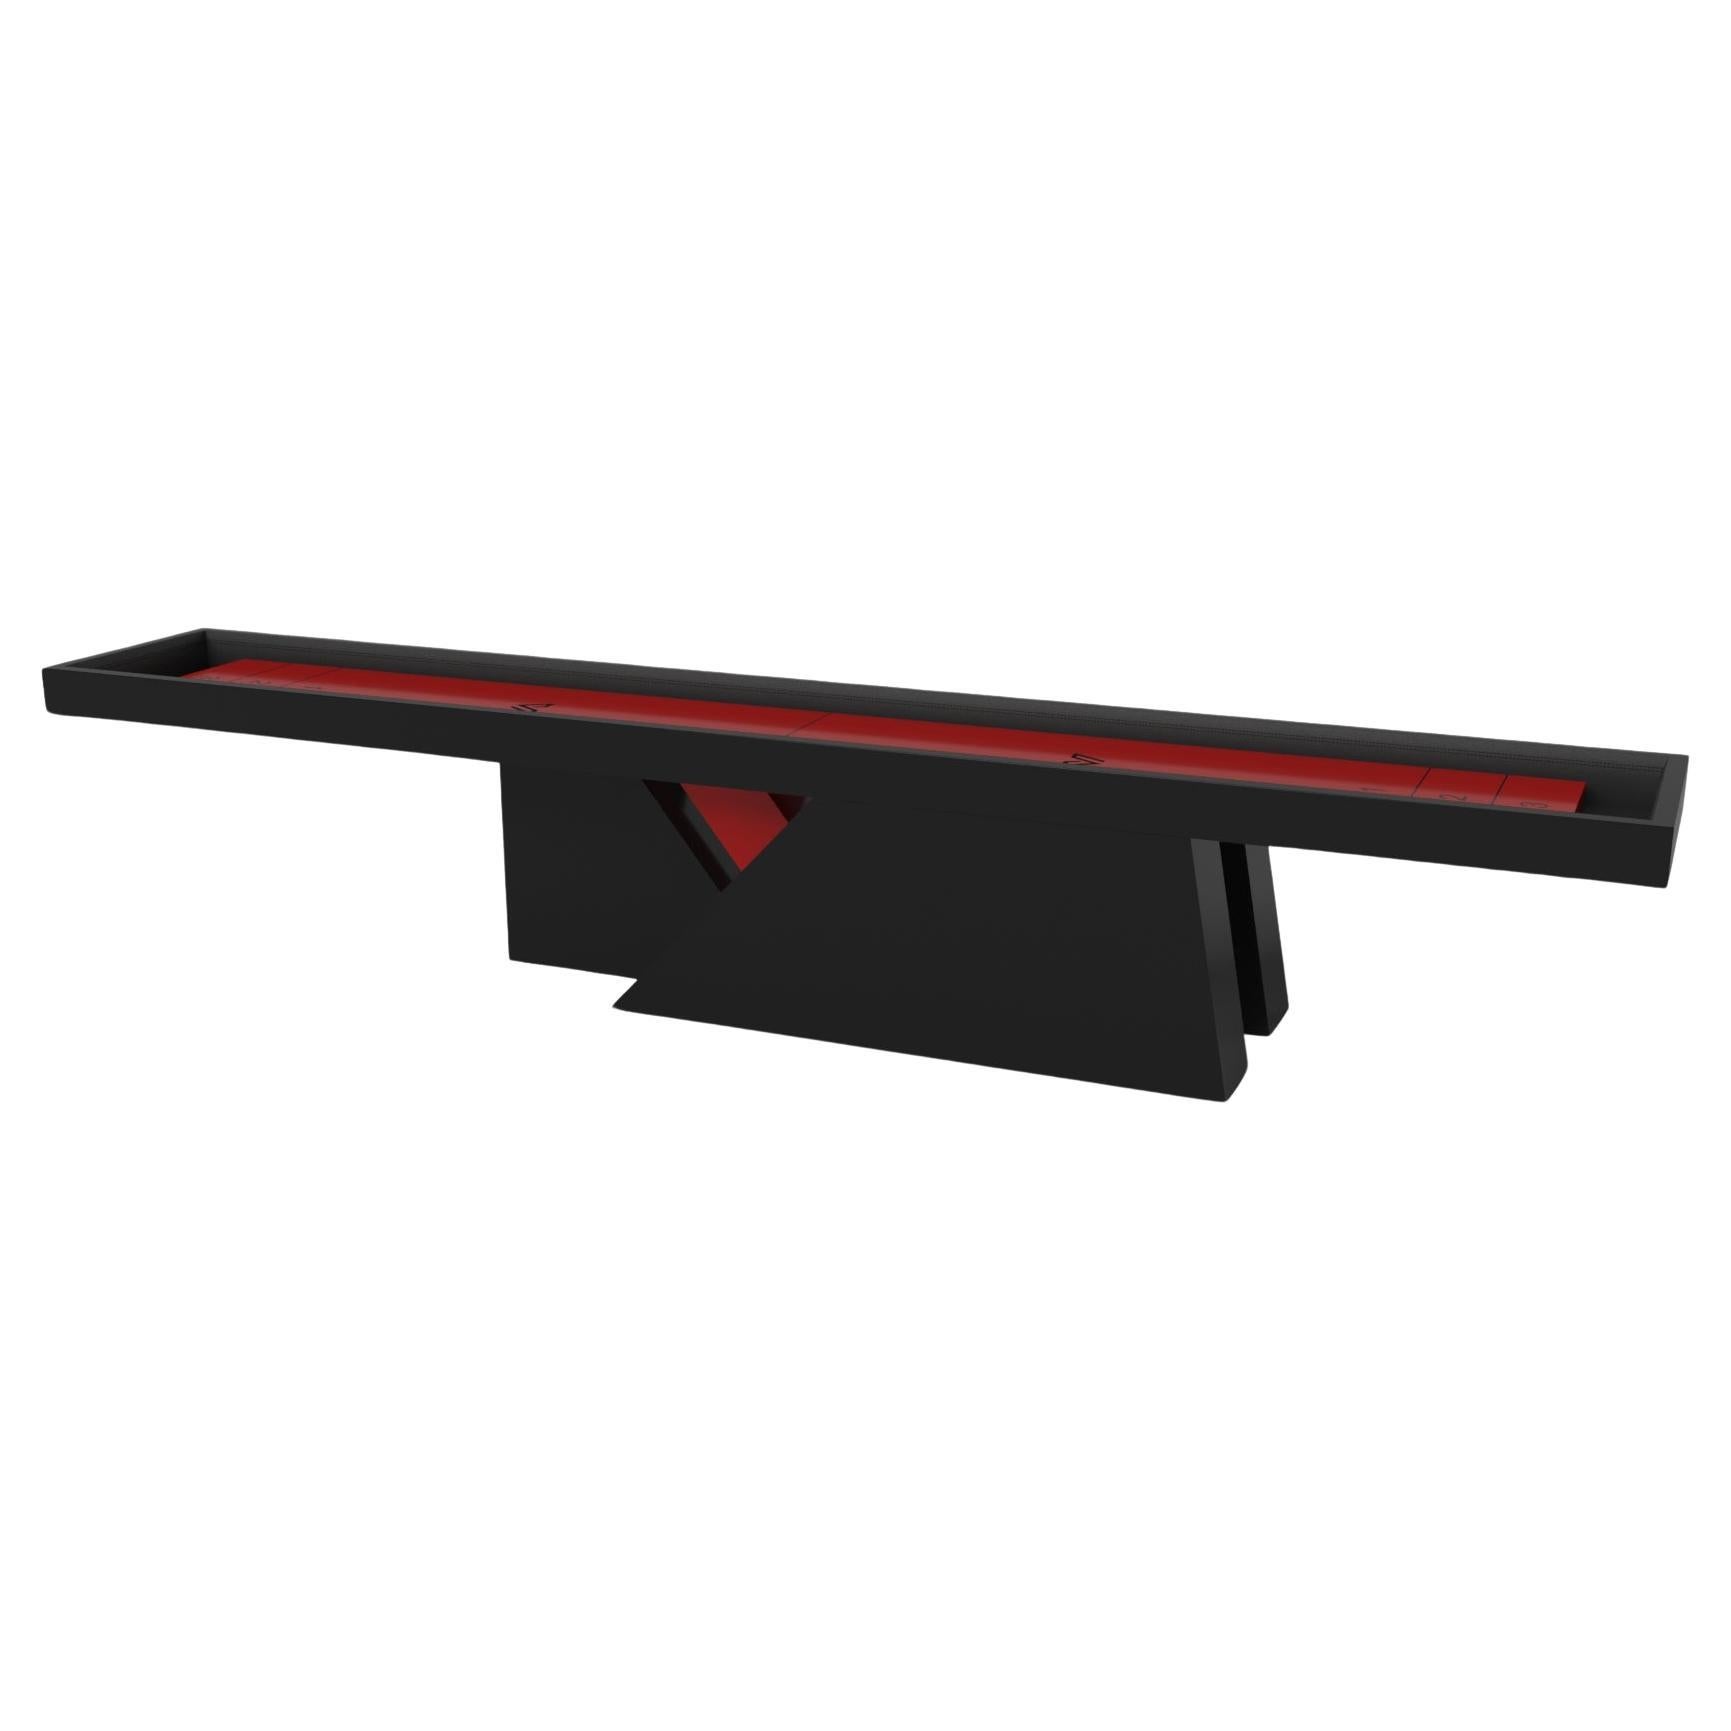 Tables de Shuffleboard Stilt de Elevate Customs / Couleur Pantone Black en 9' -USA